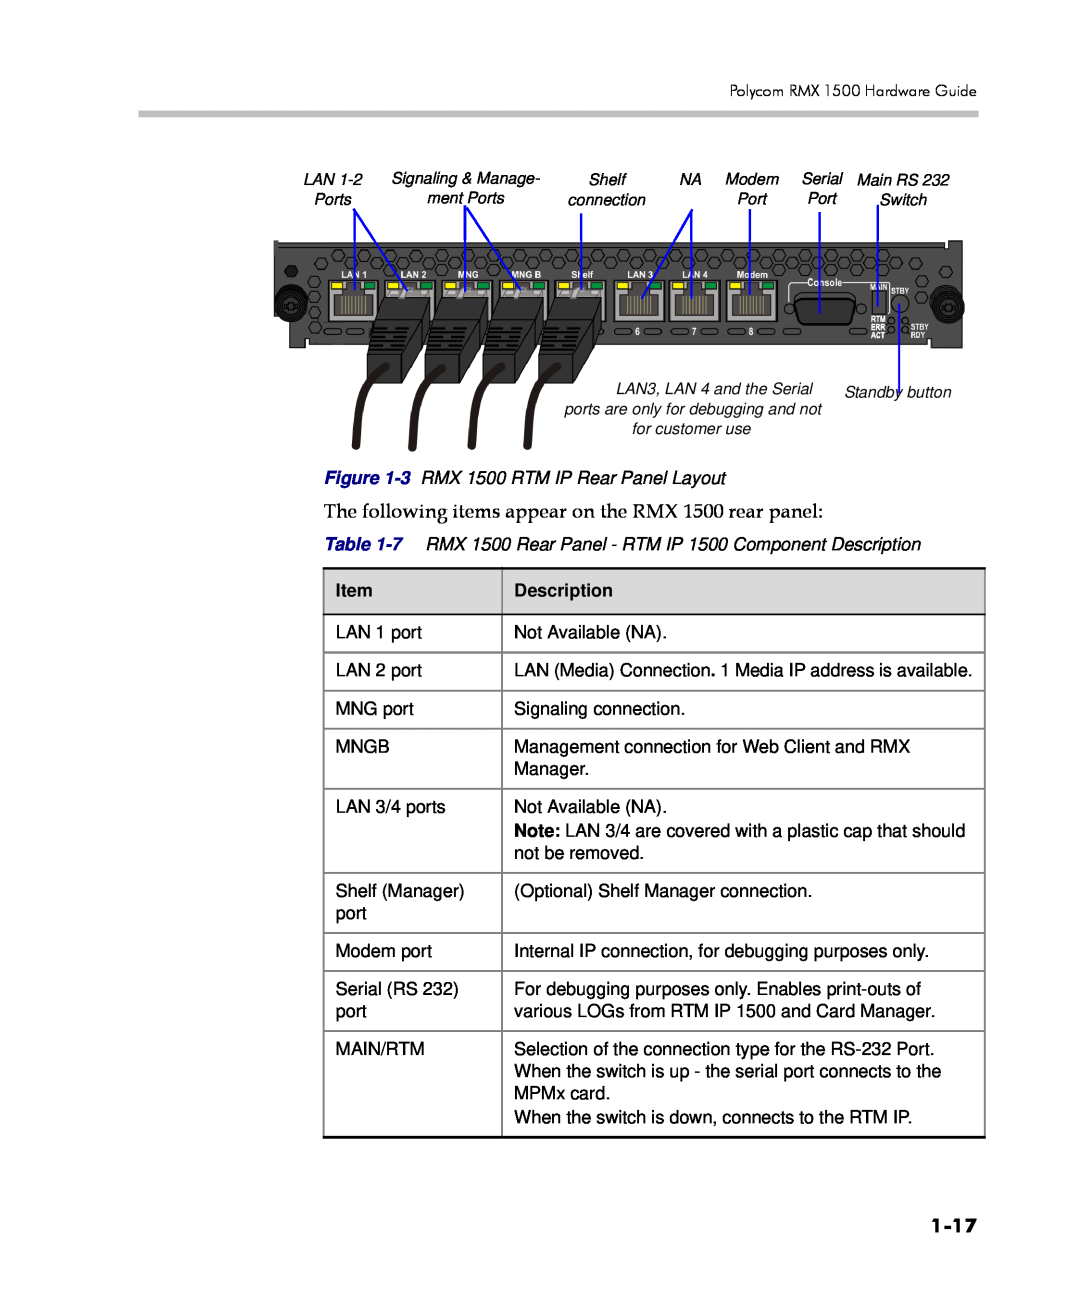 Polycom DOC2557C manual 1-17, The following items appear on the RMX 1500 rear panel, Description 